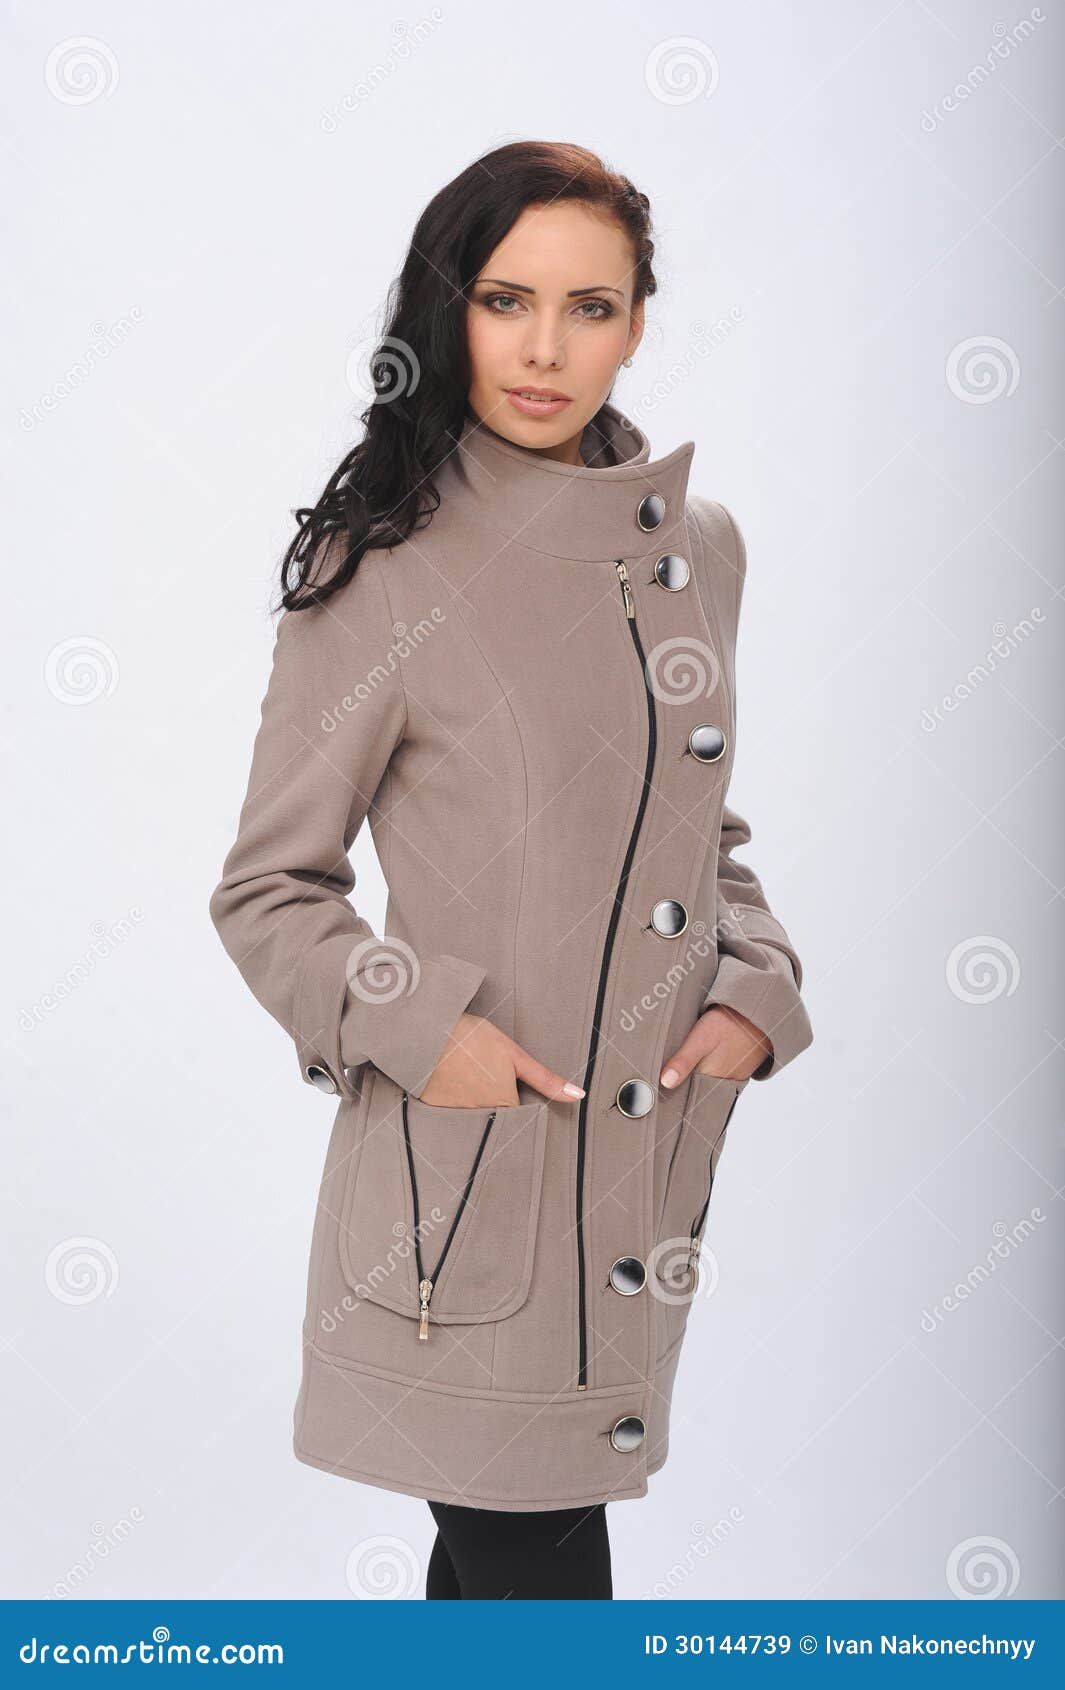 Girl in overcoat stock image. Image of background, coat - 30144739